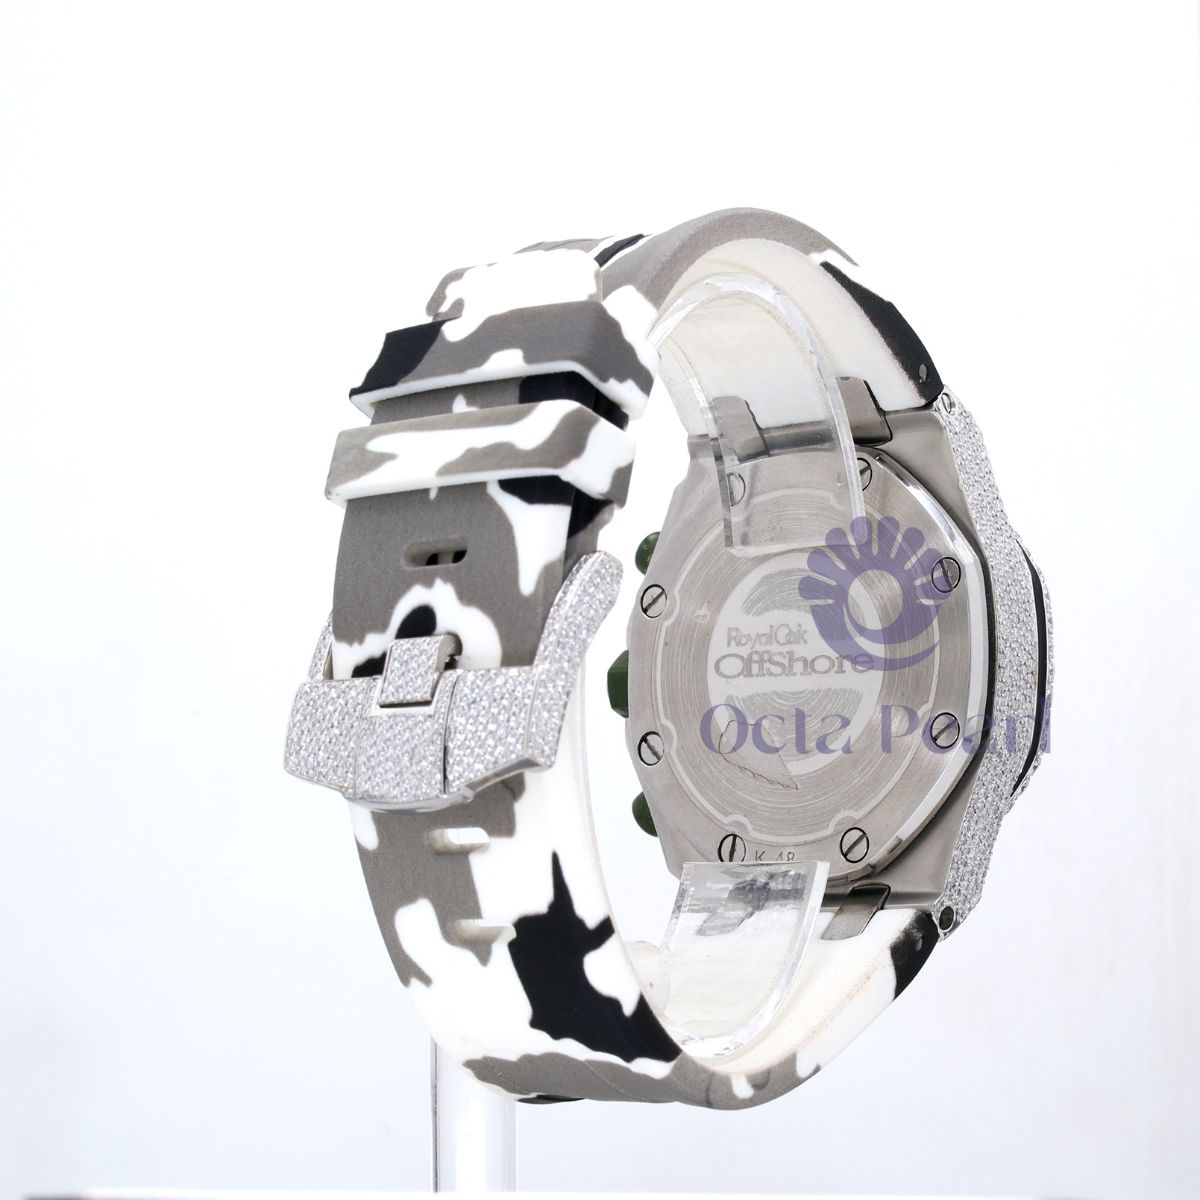 Round Moissanite Military Style Silicon Strap Wrist Watch